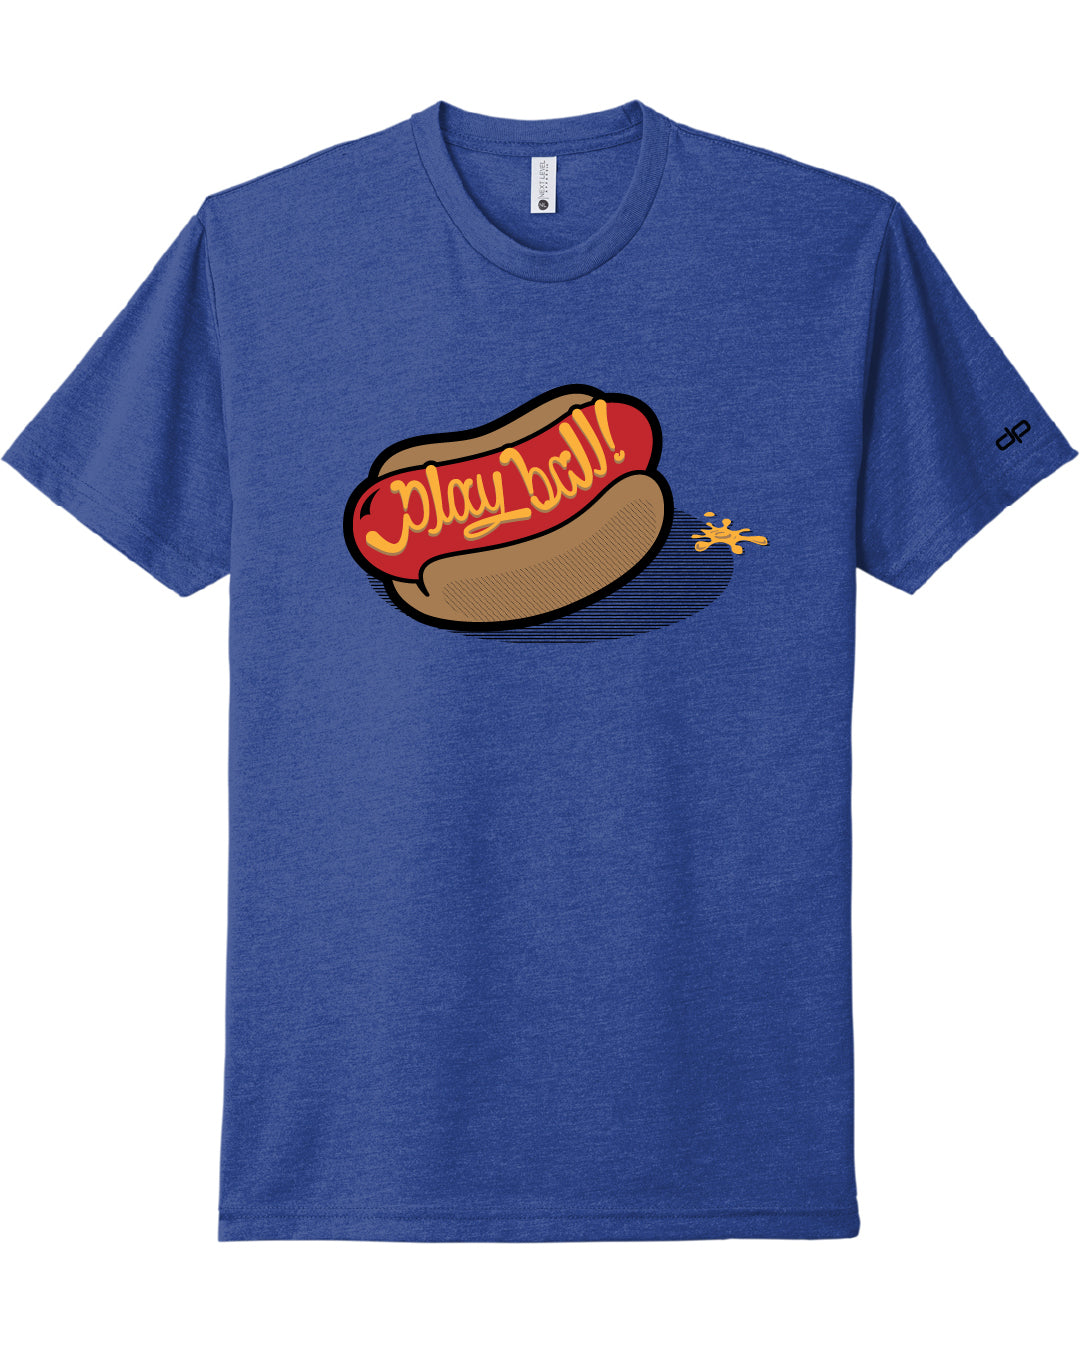 Play Ball Hot Dog t-shirt